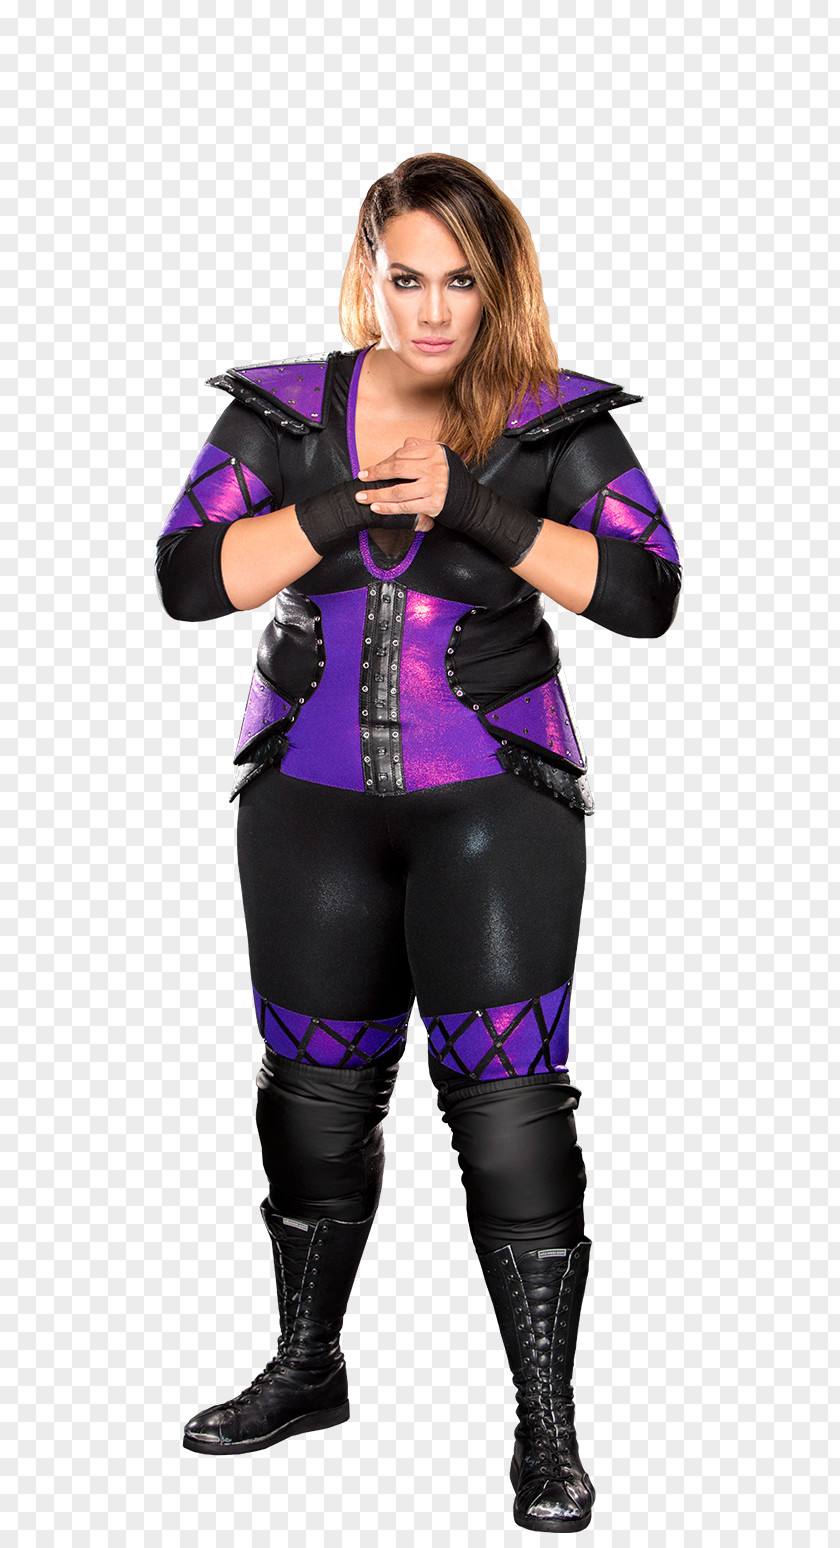 Nia Jax WWE Raw Royal Rumble 2018 NXT Women In PNG in WWE, wrestler clipart PNG